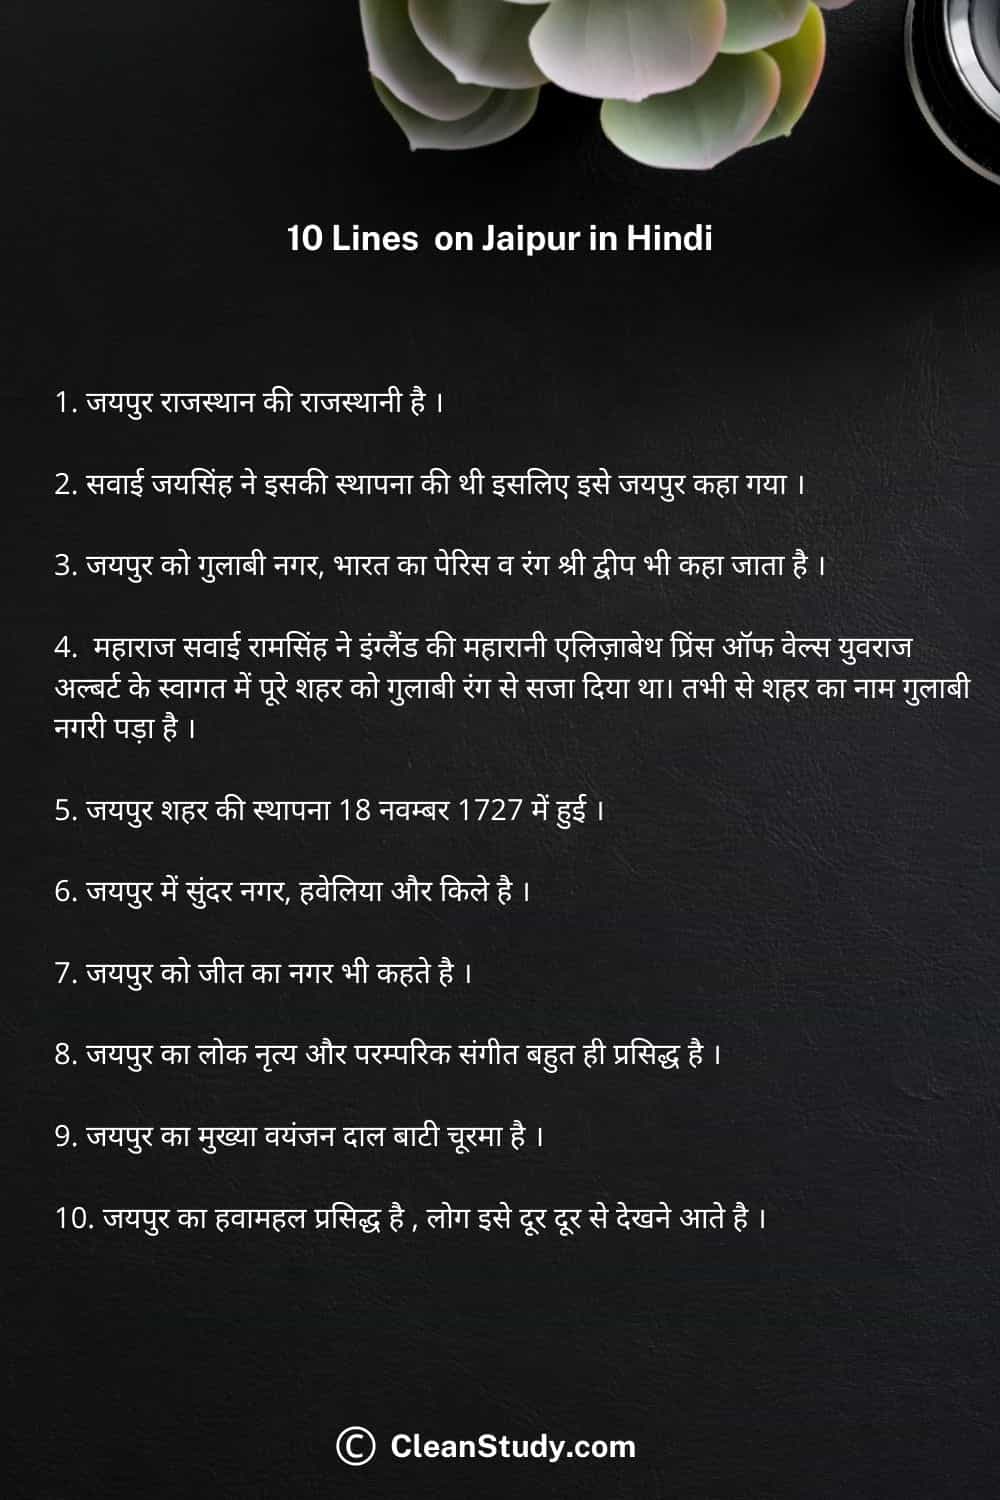 10 lines on Jaipur in hindi